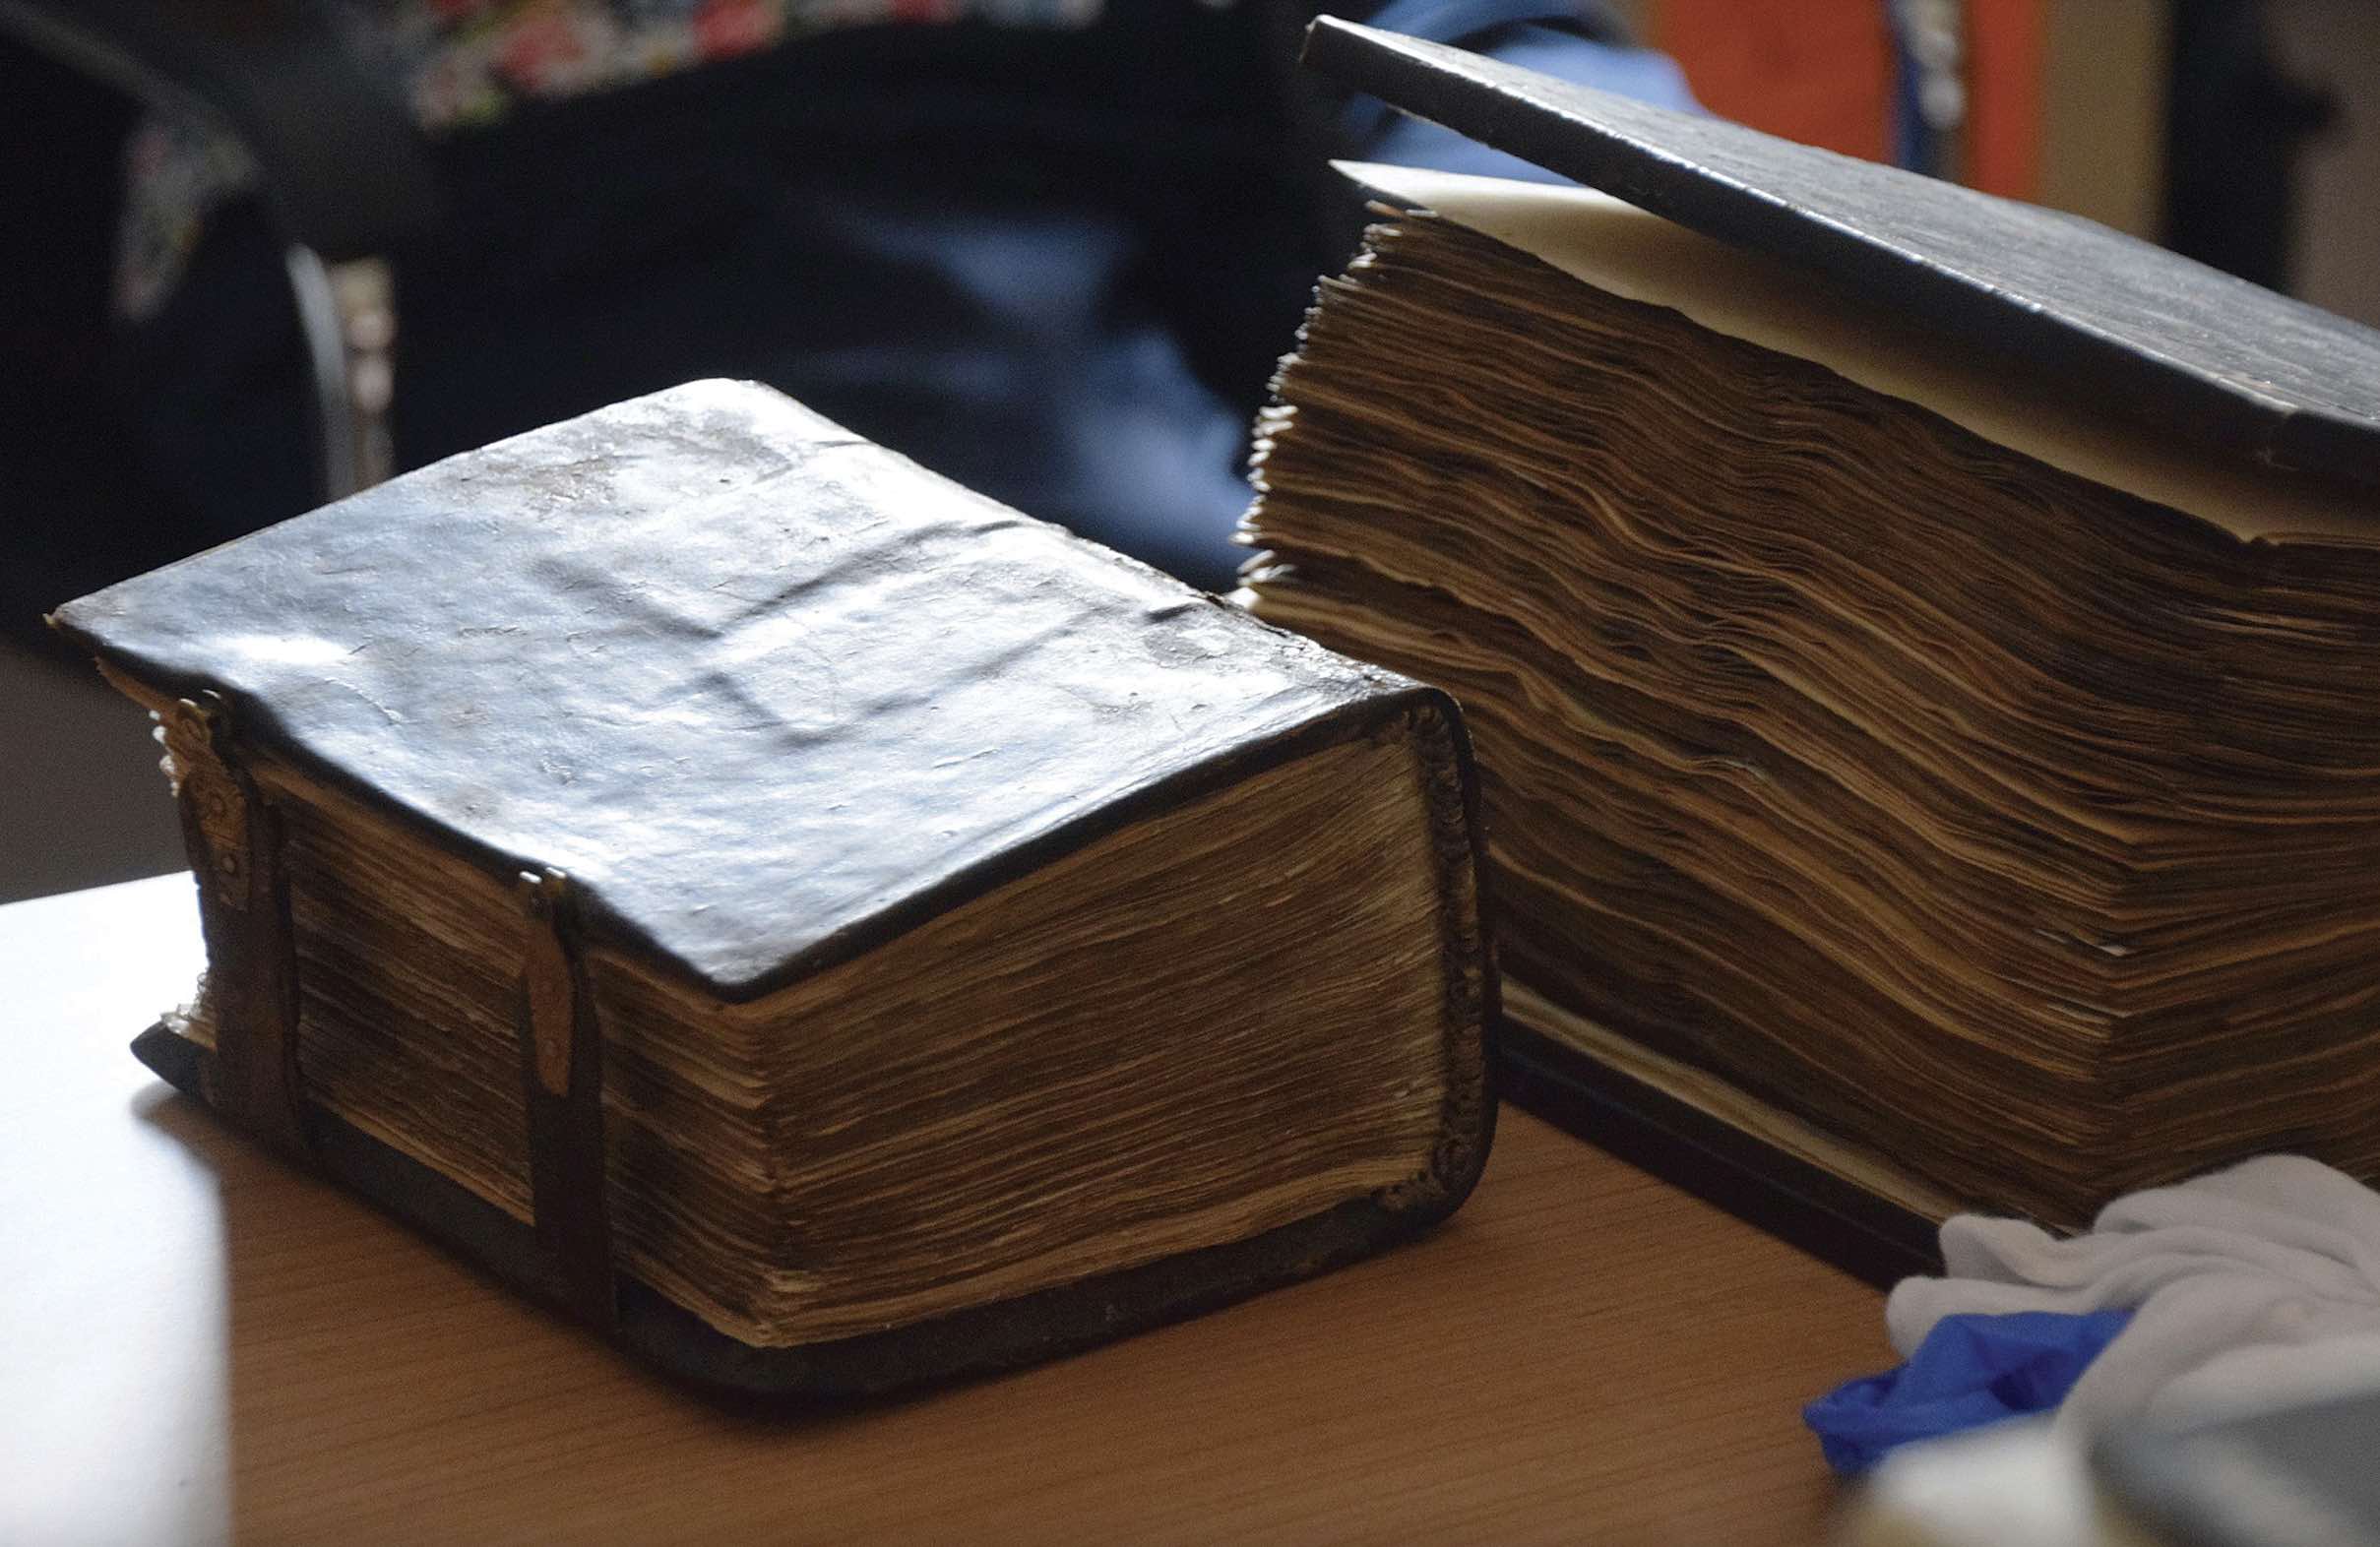 Manuscripts in Pakrac, awaiting digitization